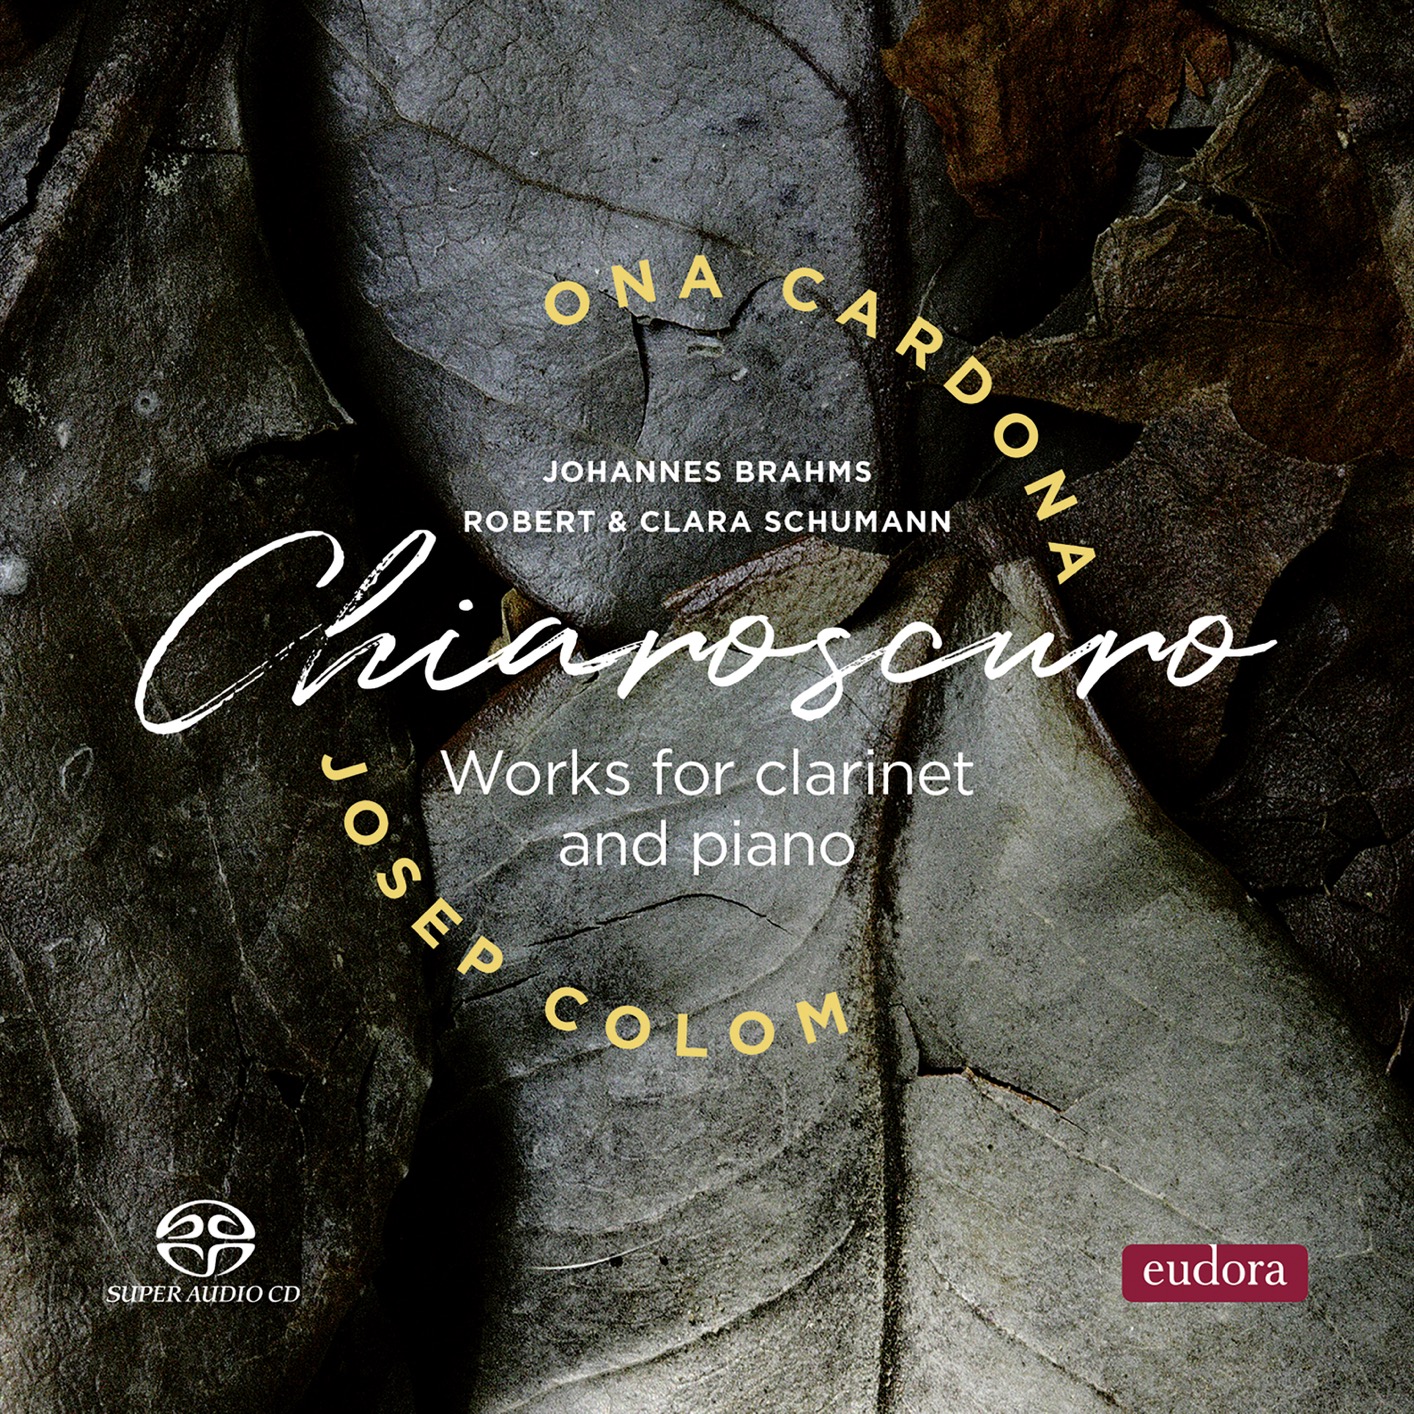 Ona Cardona & Josep Colom – Chiaroscuro (Works for clarinet and piano) (2021) [FLAC 24bit/192kHz]